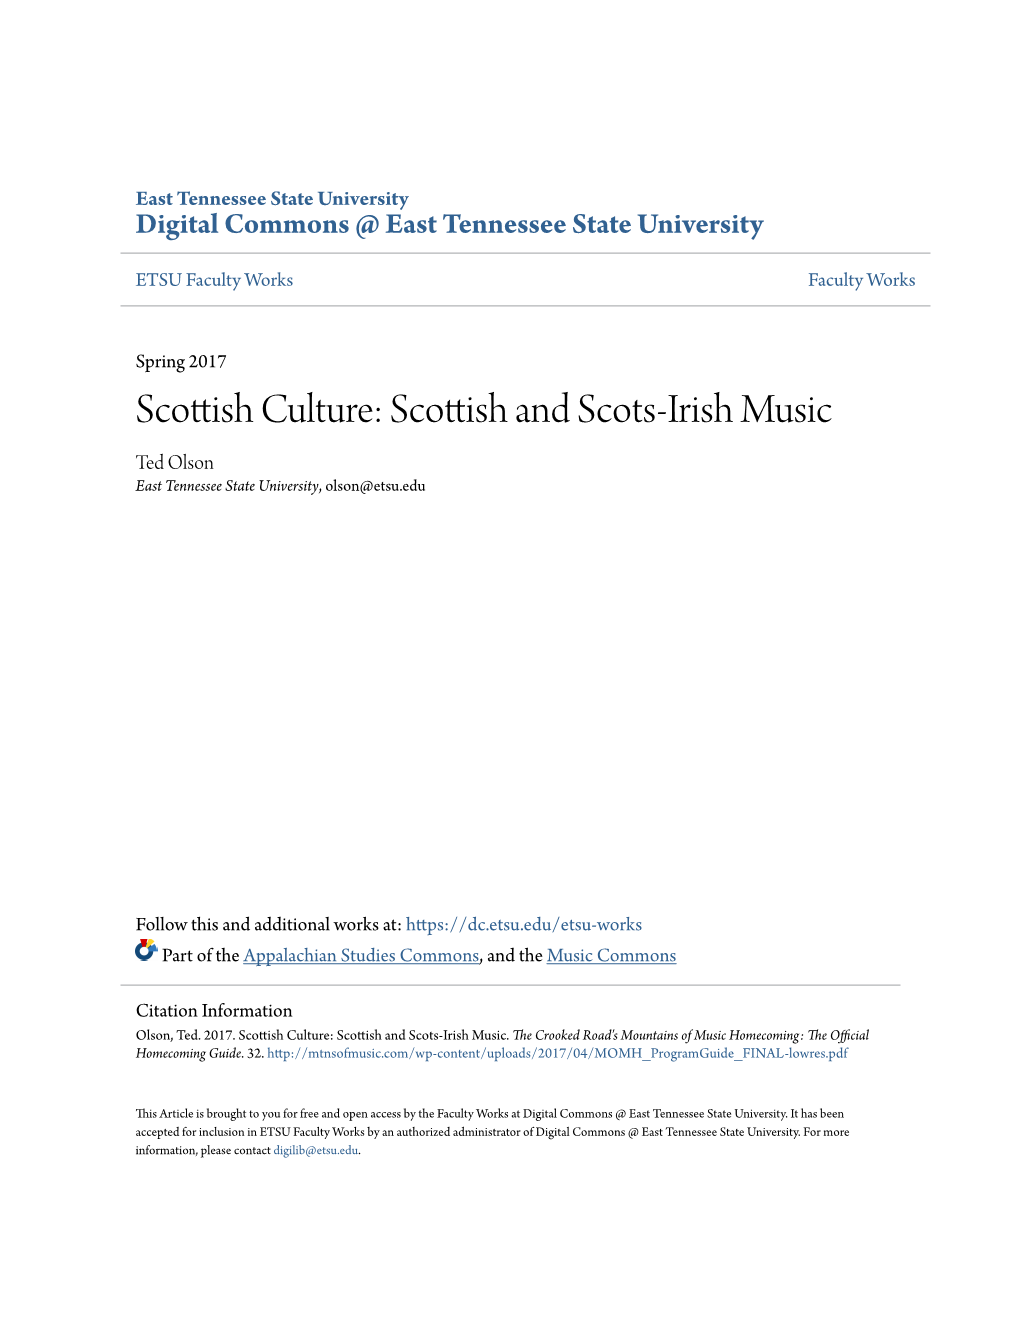 Scottish and Scots-Irish Music Ted Olson East Tennessee State University, Olson@Etsu.Edu